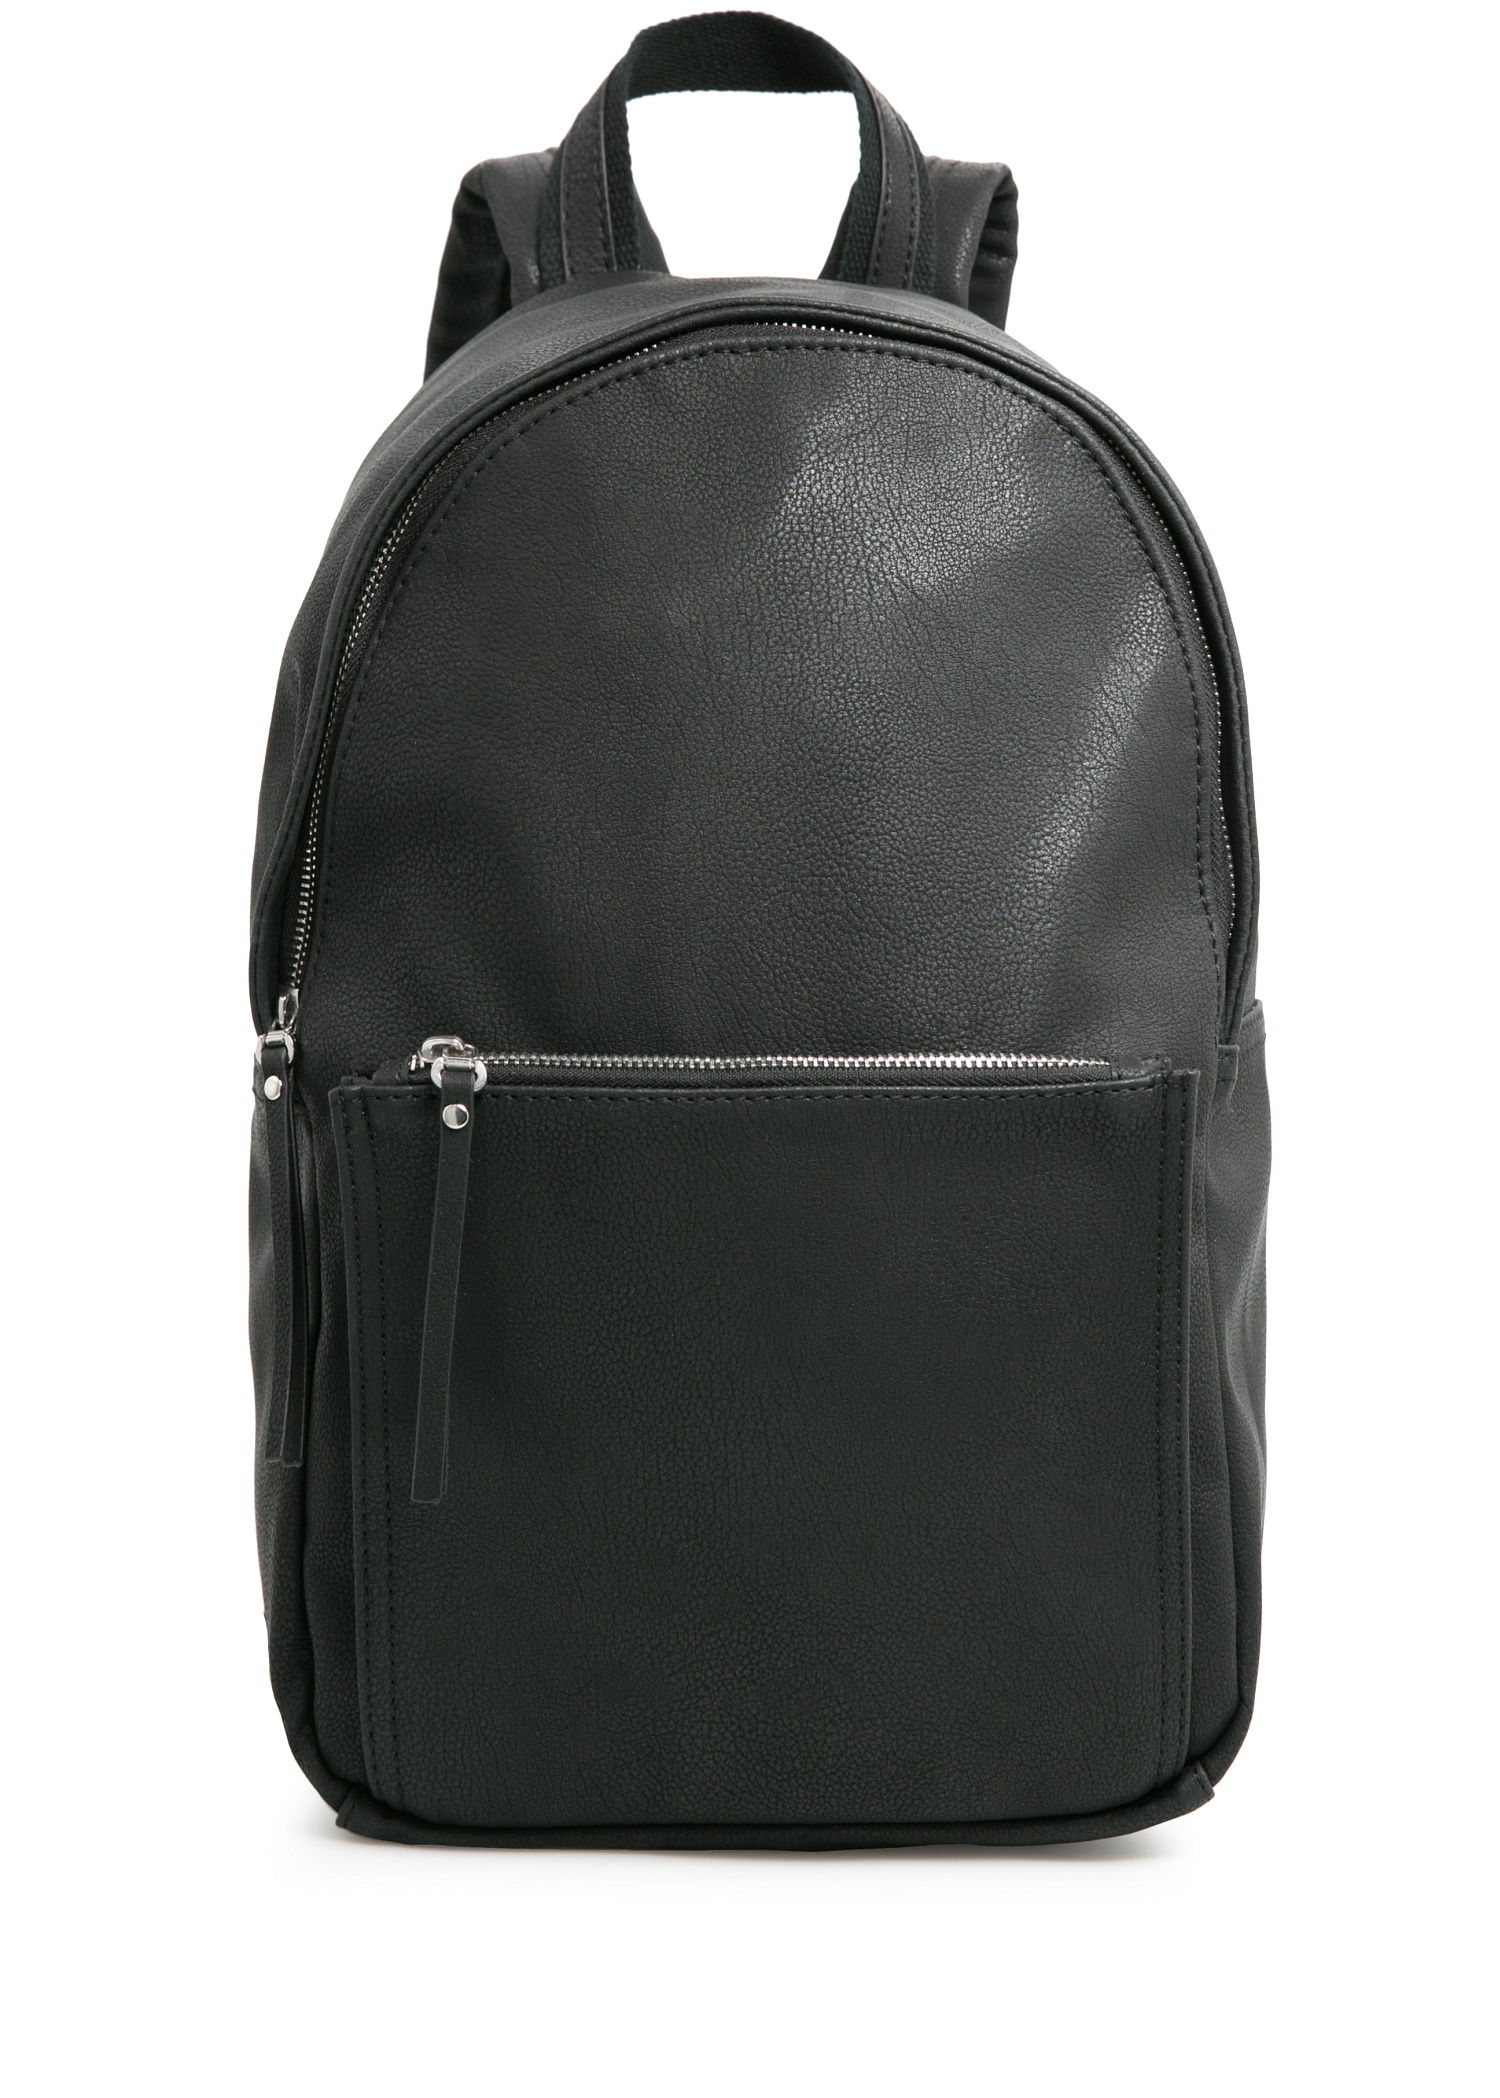 Lyst - Mango Pebbled Backpack in Black for Men